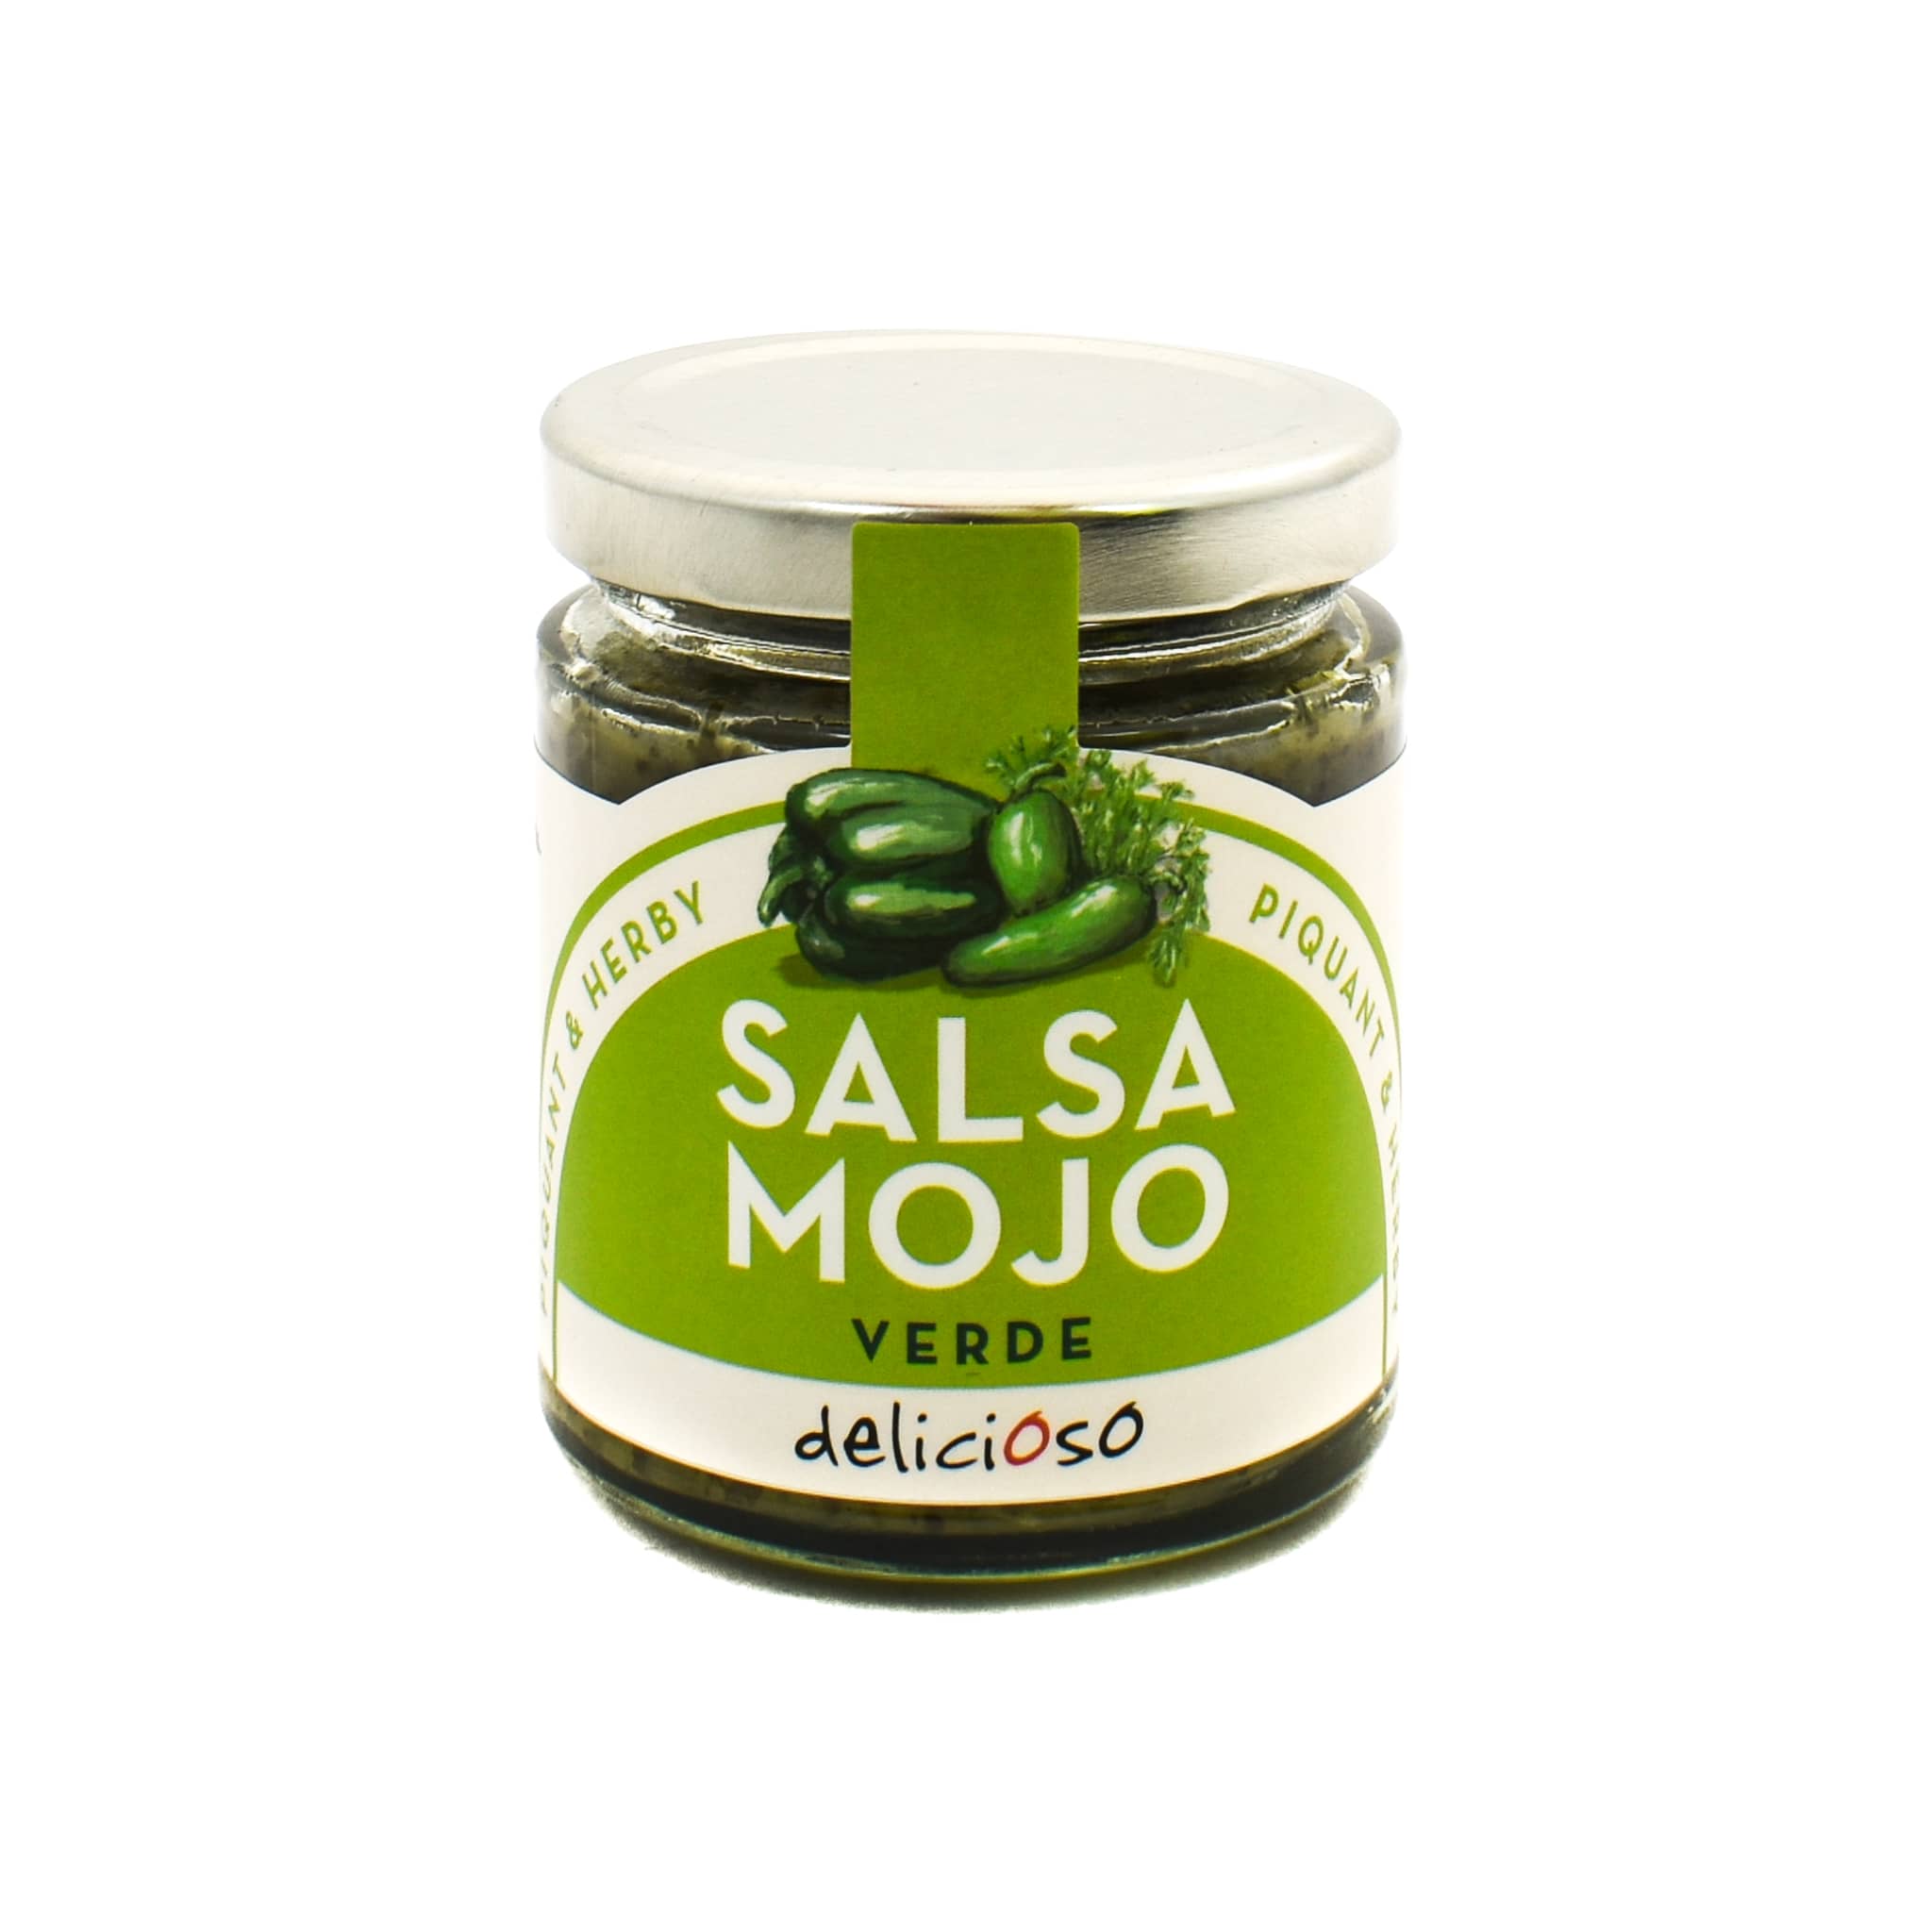 Delicioso Salsa Mojo Verde 165g